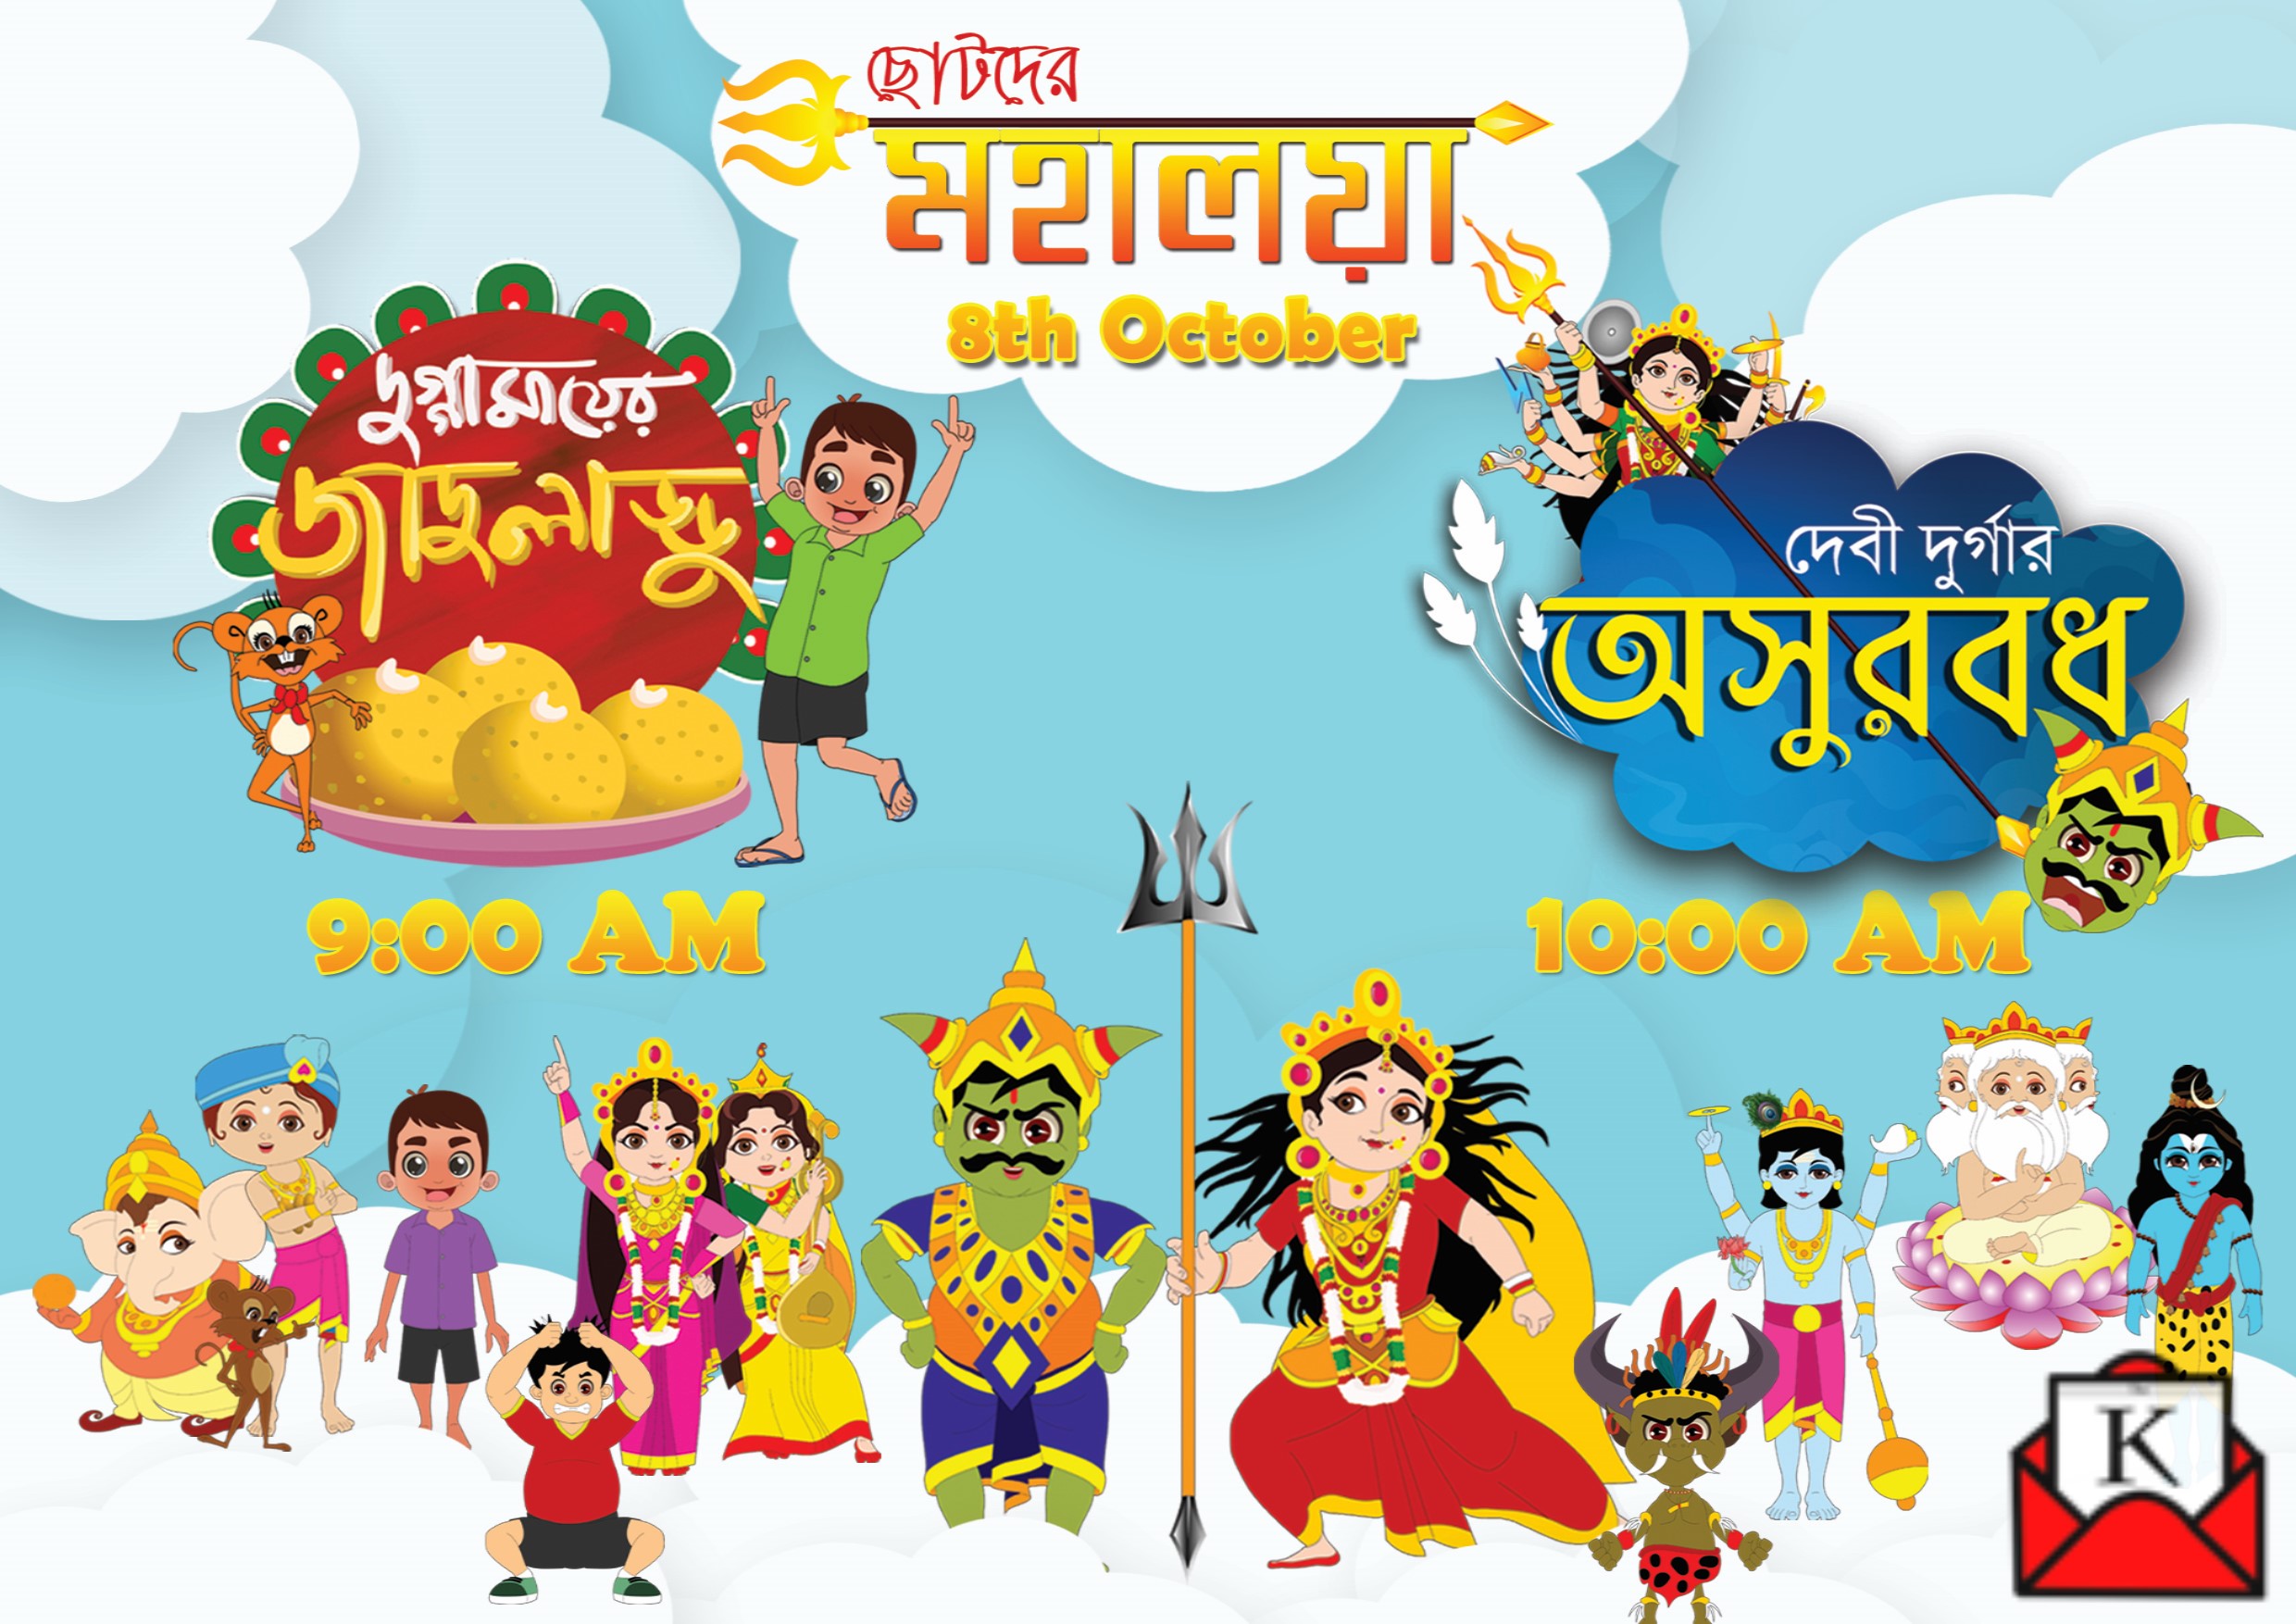 Chhotoder Mahalaya on Zee Bangla to Tell Inspiring Stories About Ma Durga for Kids